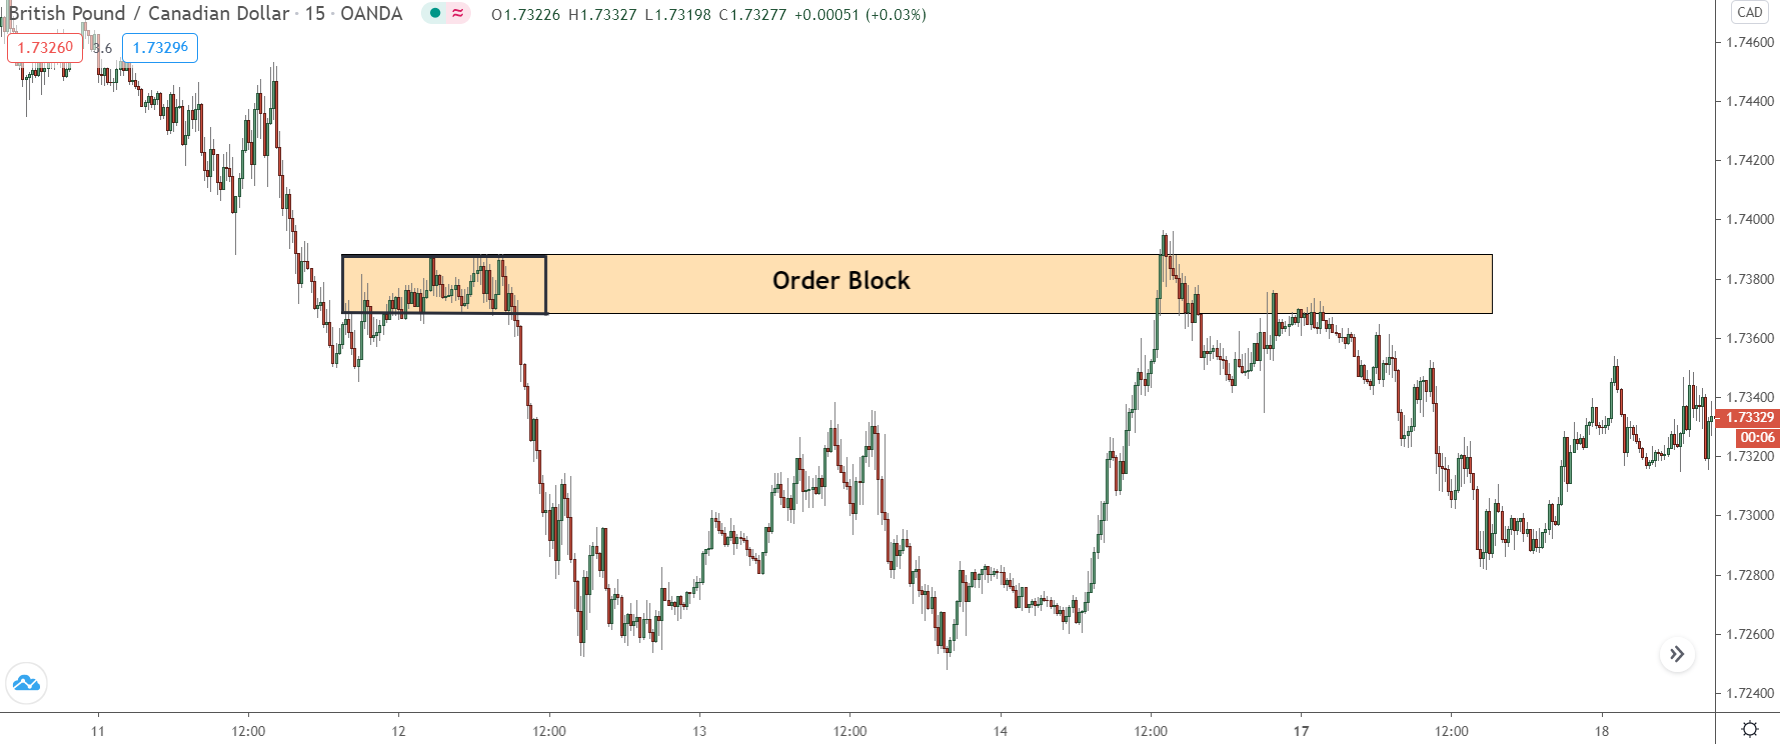 Order block trading